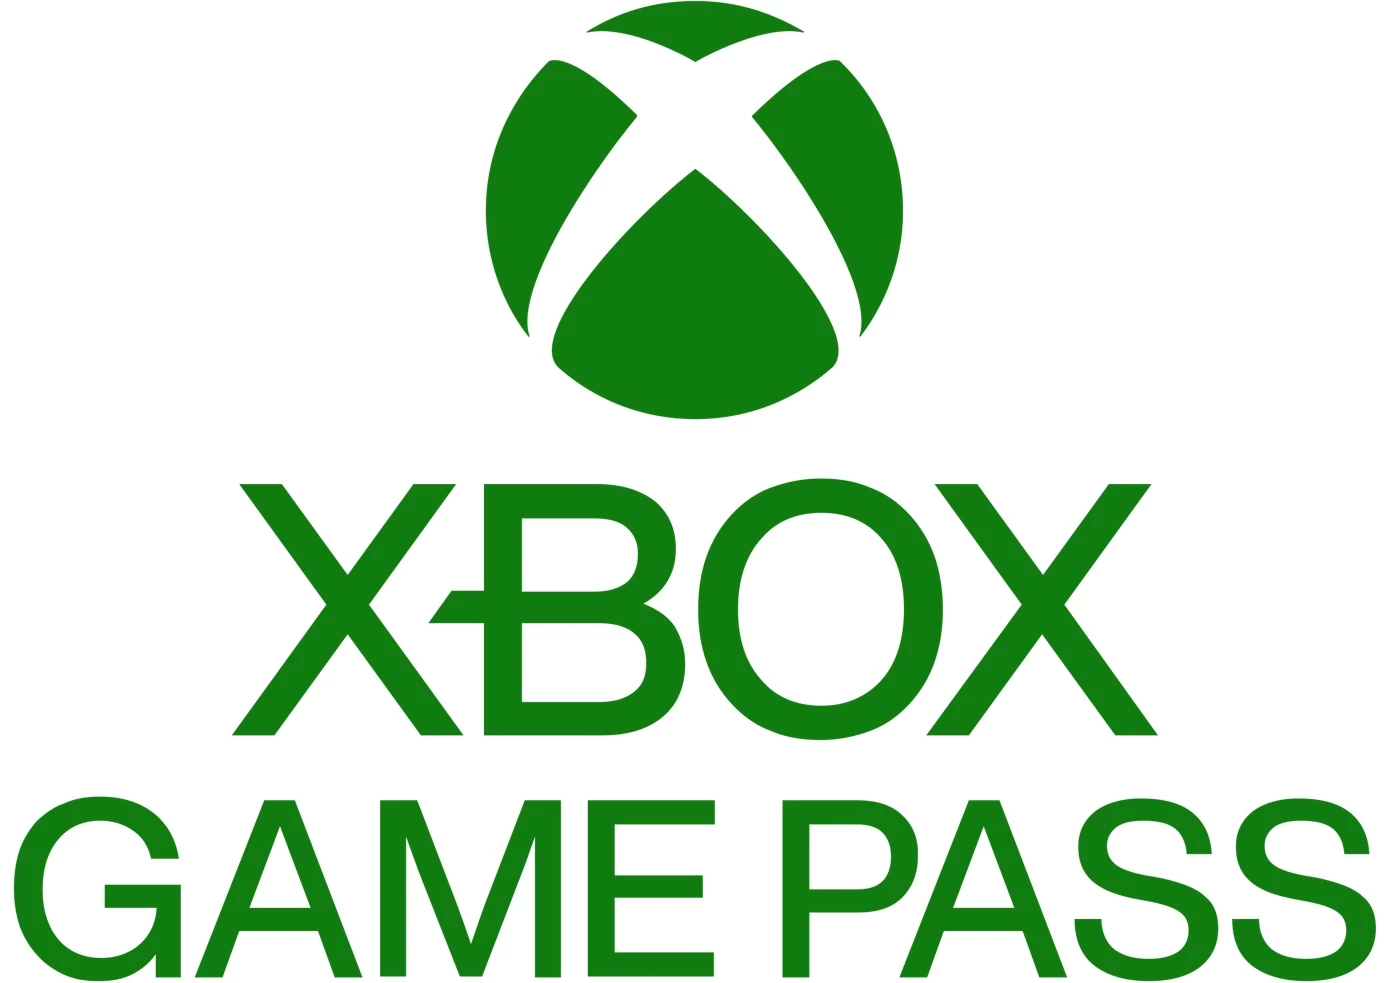 Xbox Gamepass Pc Key 1 Mes